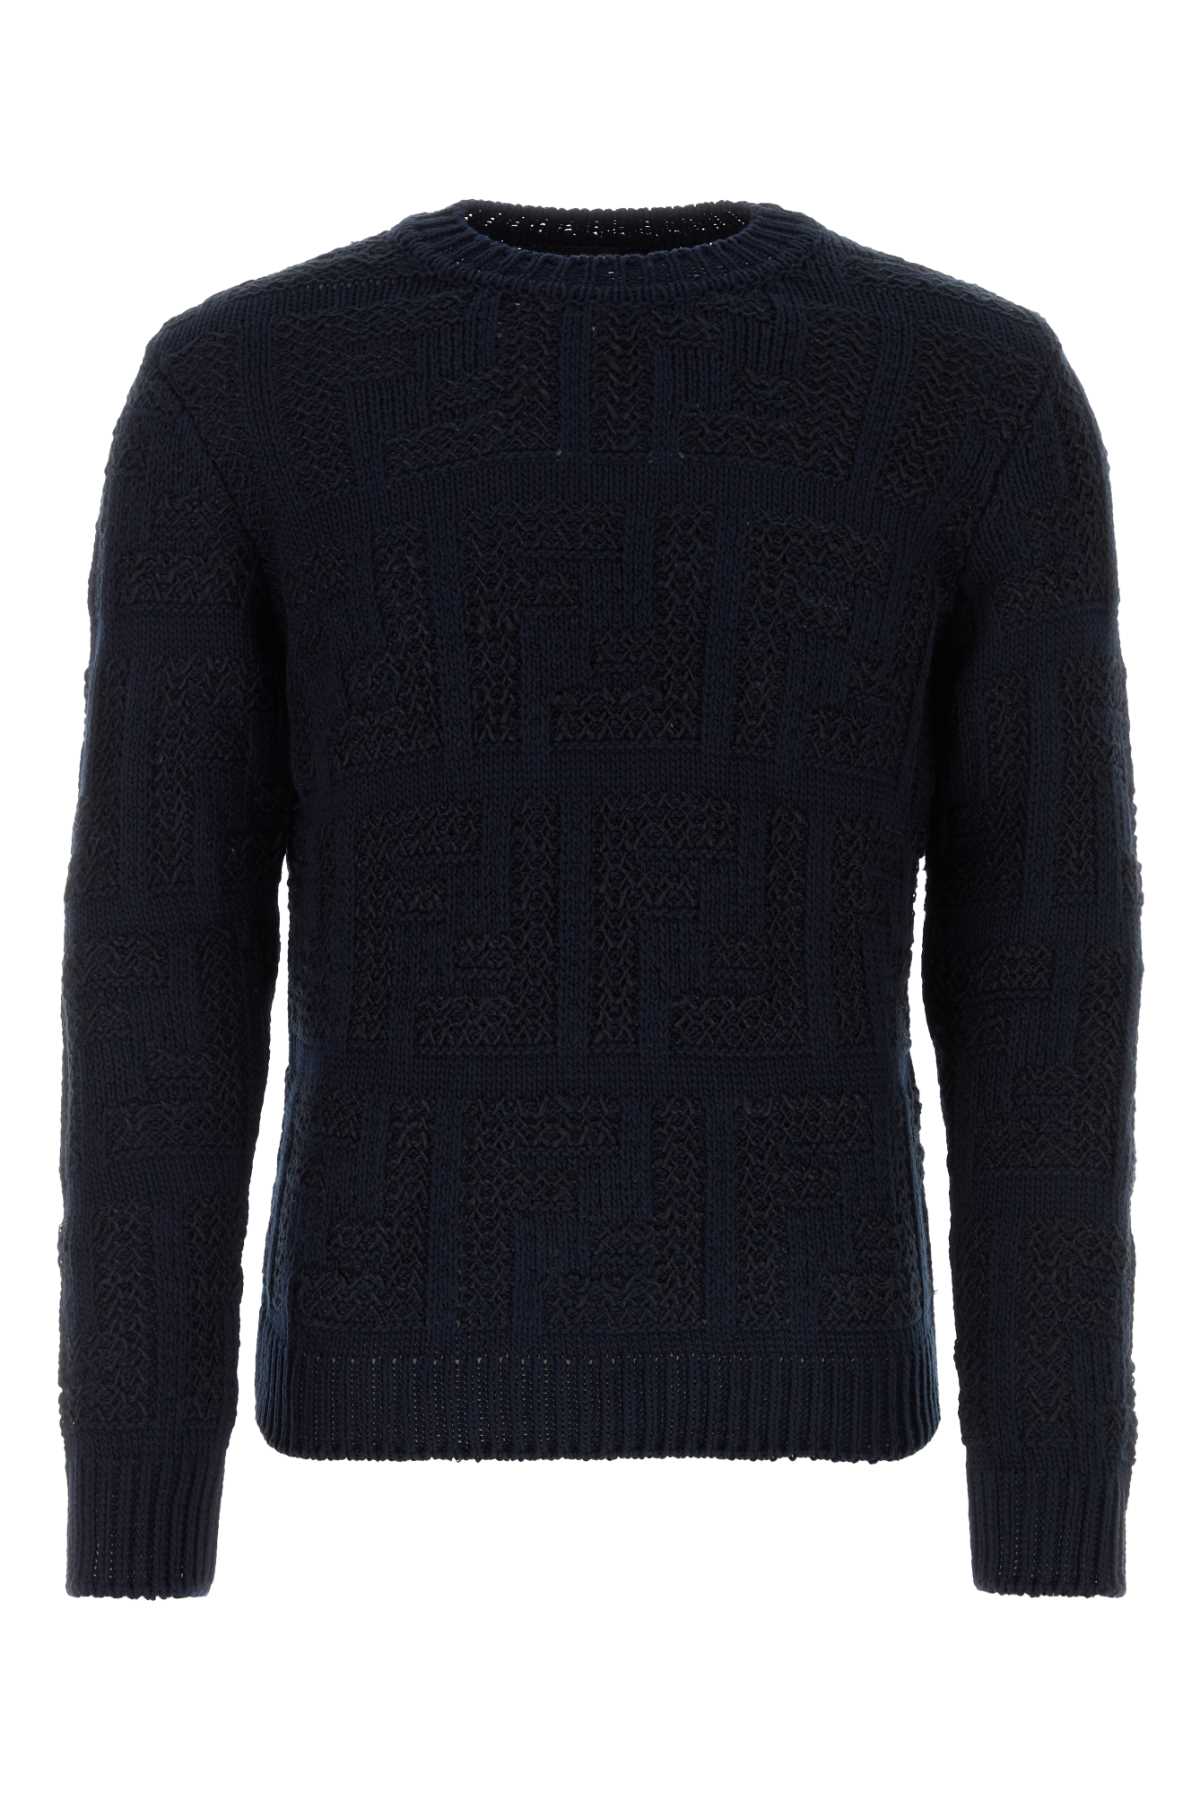 Fendi Blue Cotton Blend Sweater